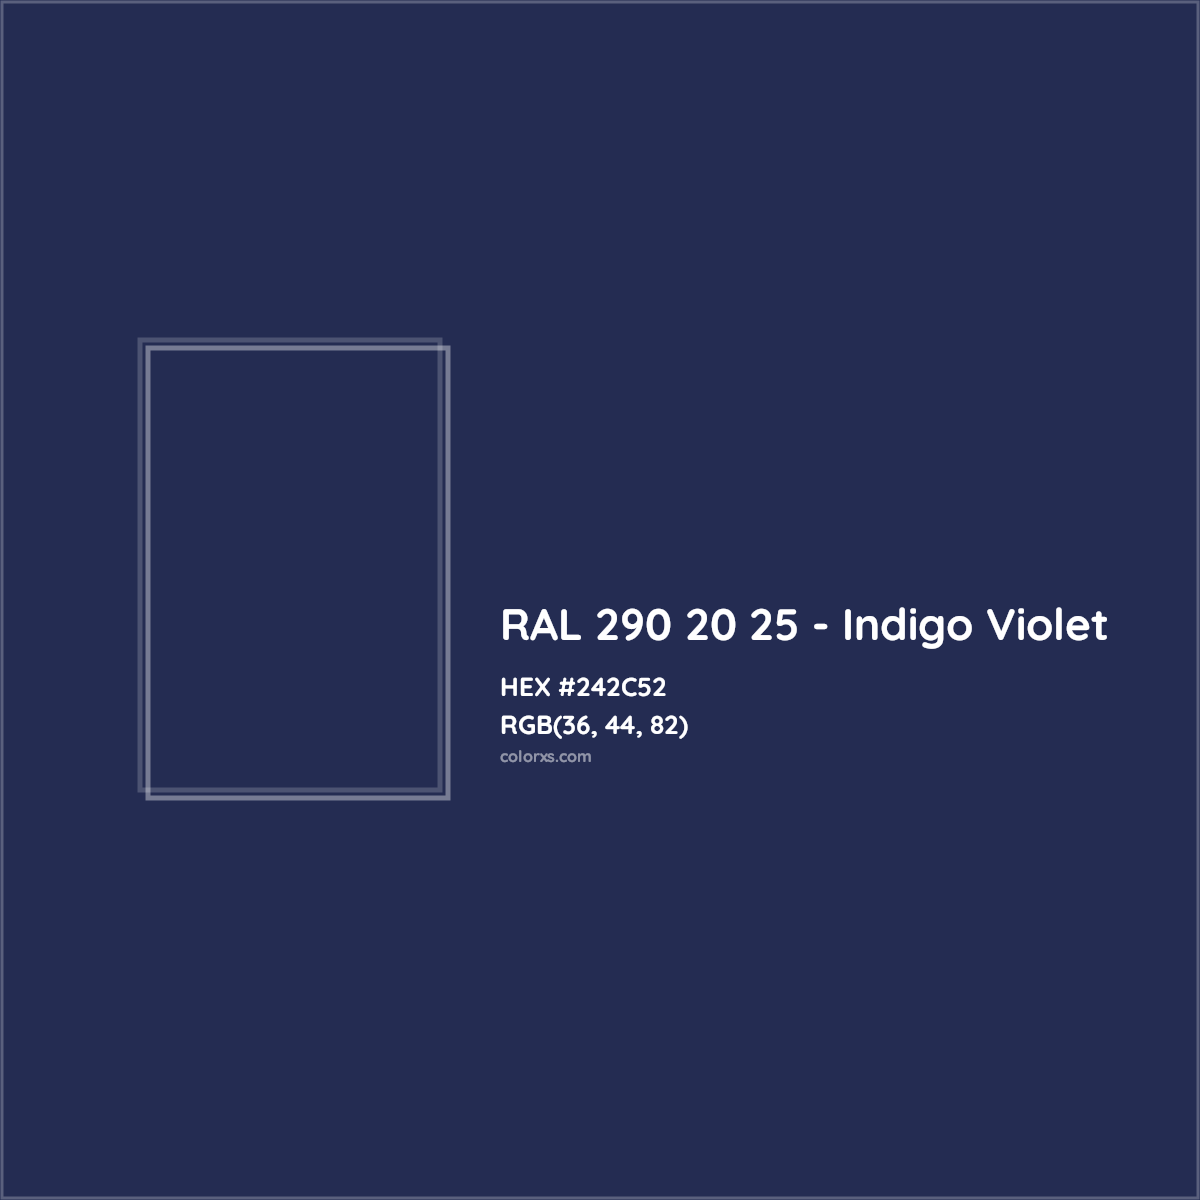 HEX #242C52 RAL 290 20 25 - Indigo Violet CMS RAL Design - Color Code